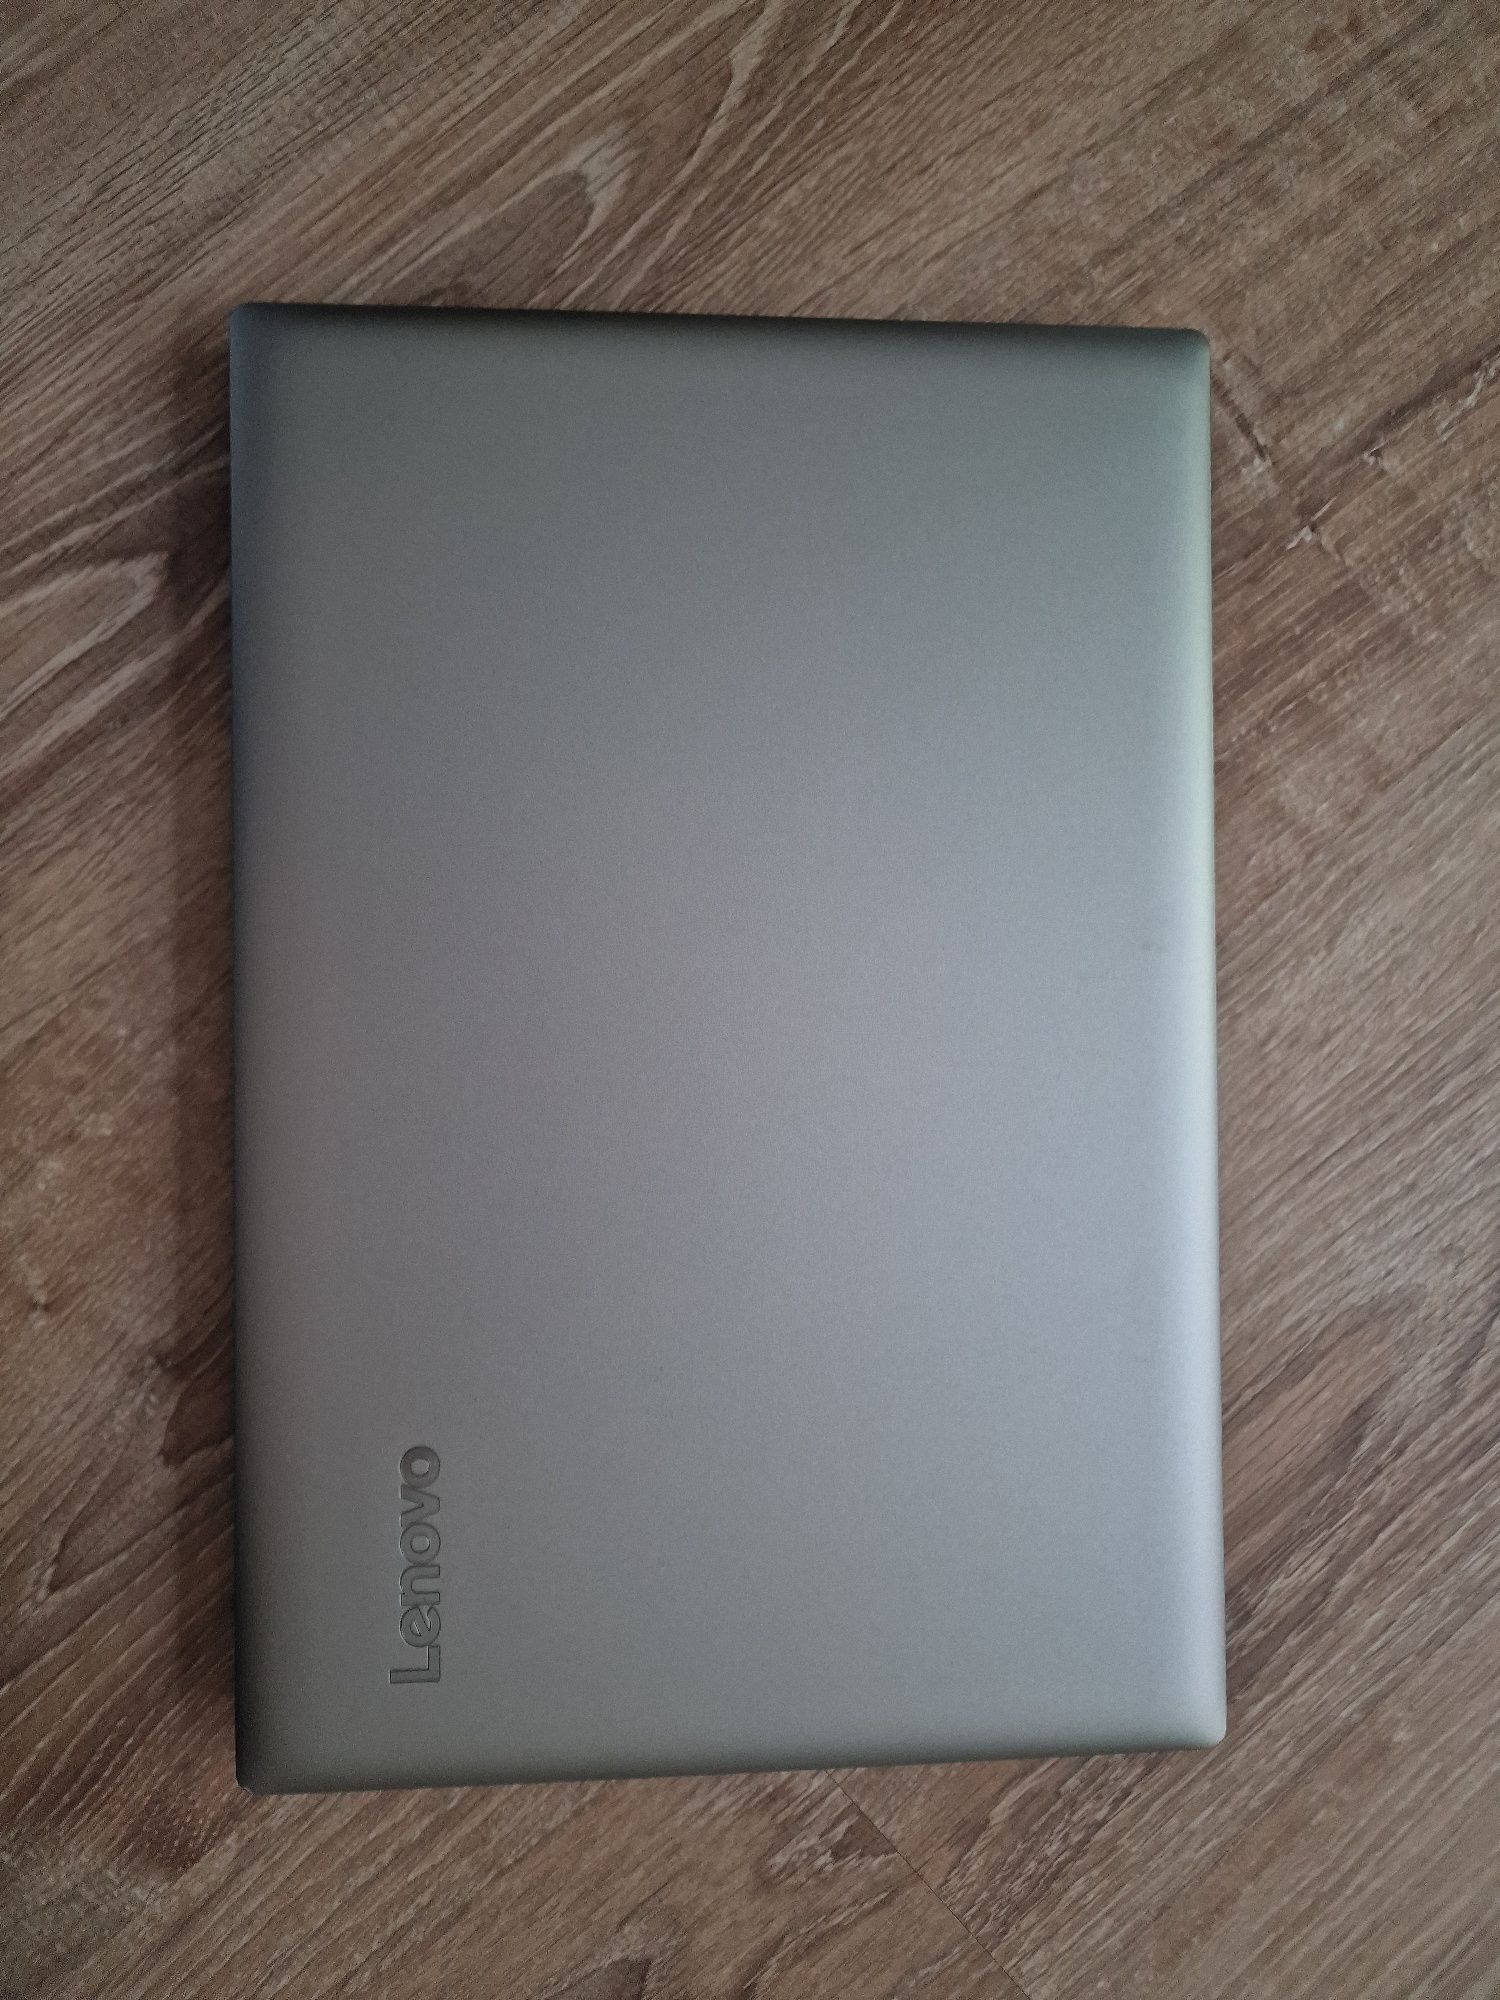 Lenovo IdeaPad 330 4GB RAM